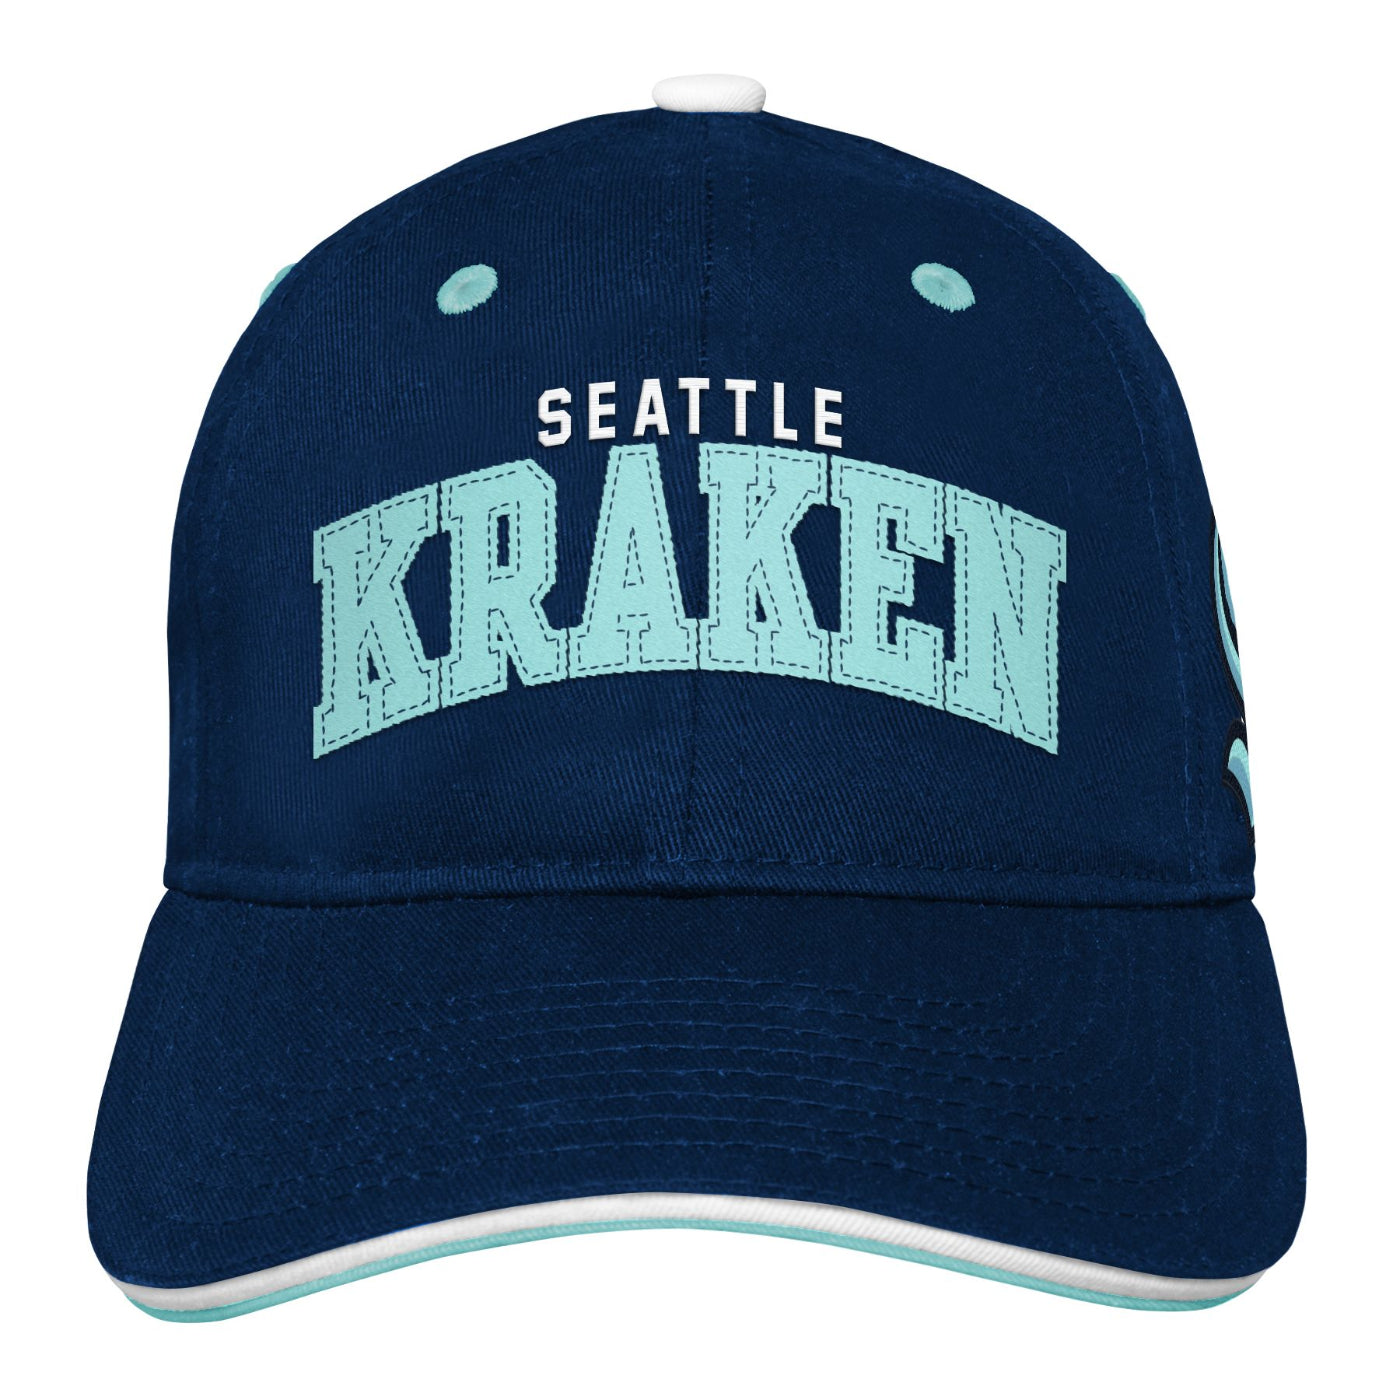 Seattle Kraken Outerstuff Collegiate Arch Cap